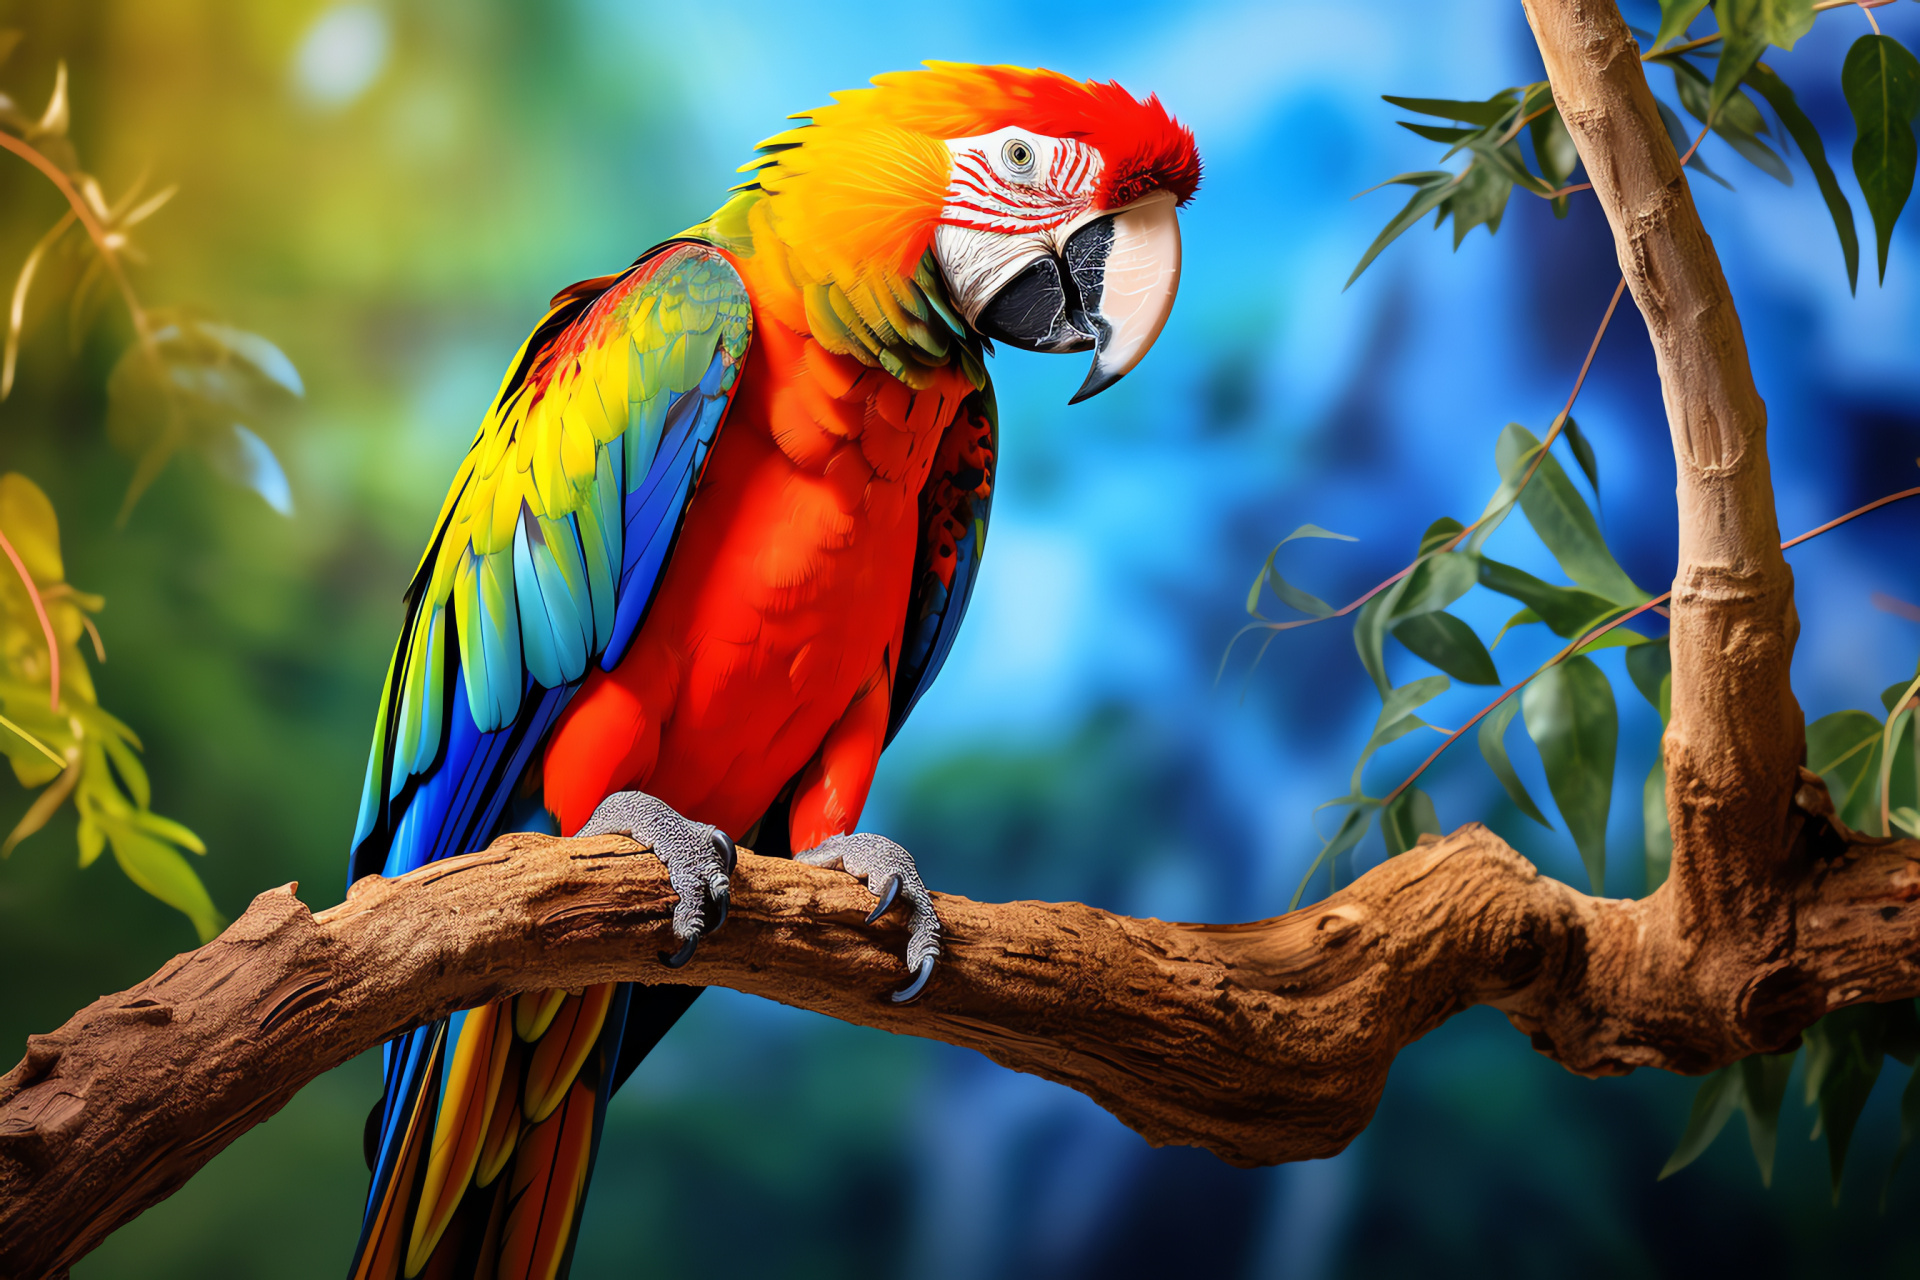 Parrot species, Avian colors, Bird branch rest, Color gradient backdrop, Captivating birdlife, HD Desktop Image